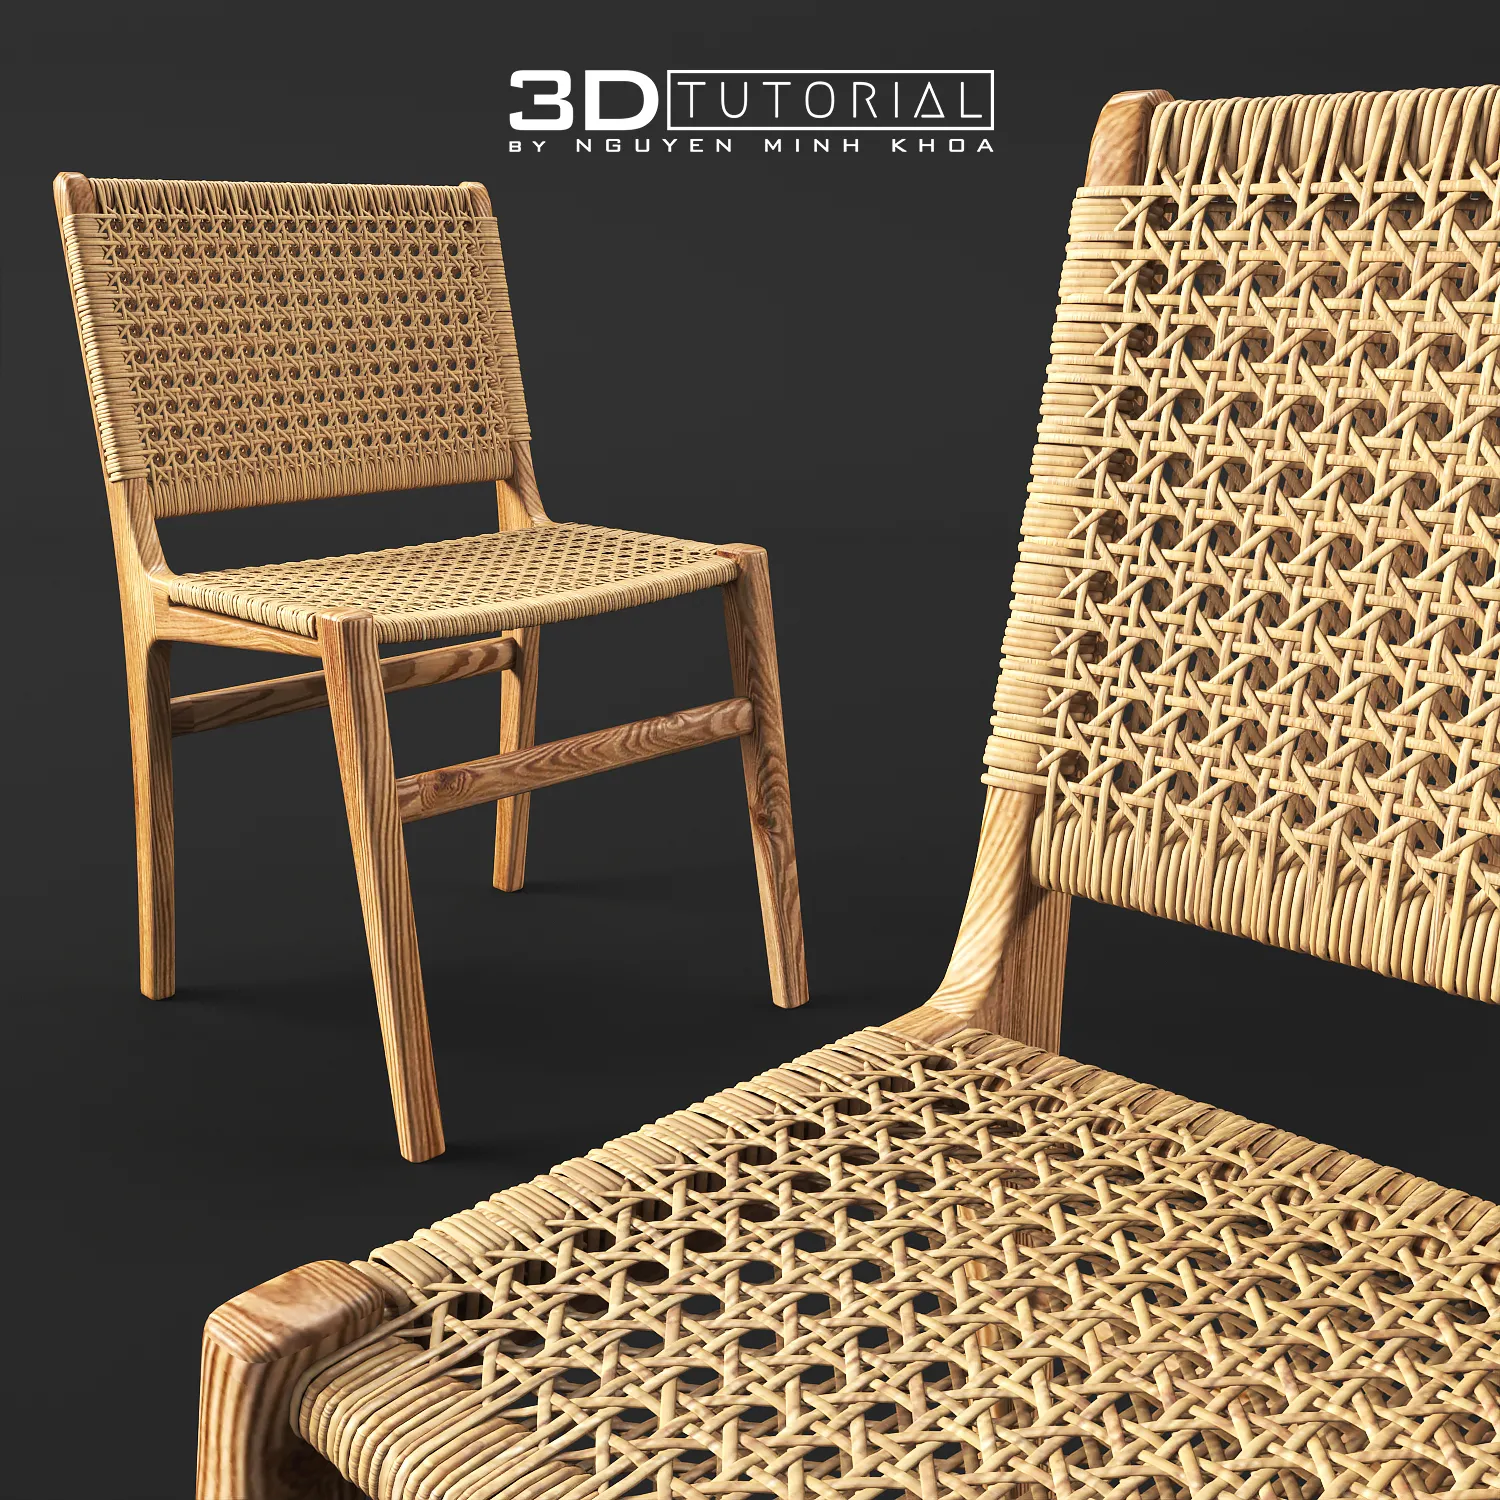 FURNITURE 3D MODELS – Rattan chair 1 modelbyNguyenMinhKhoa